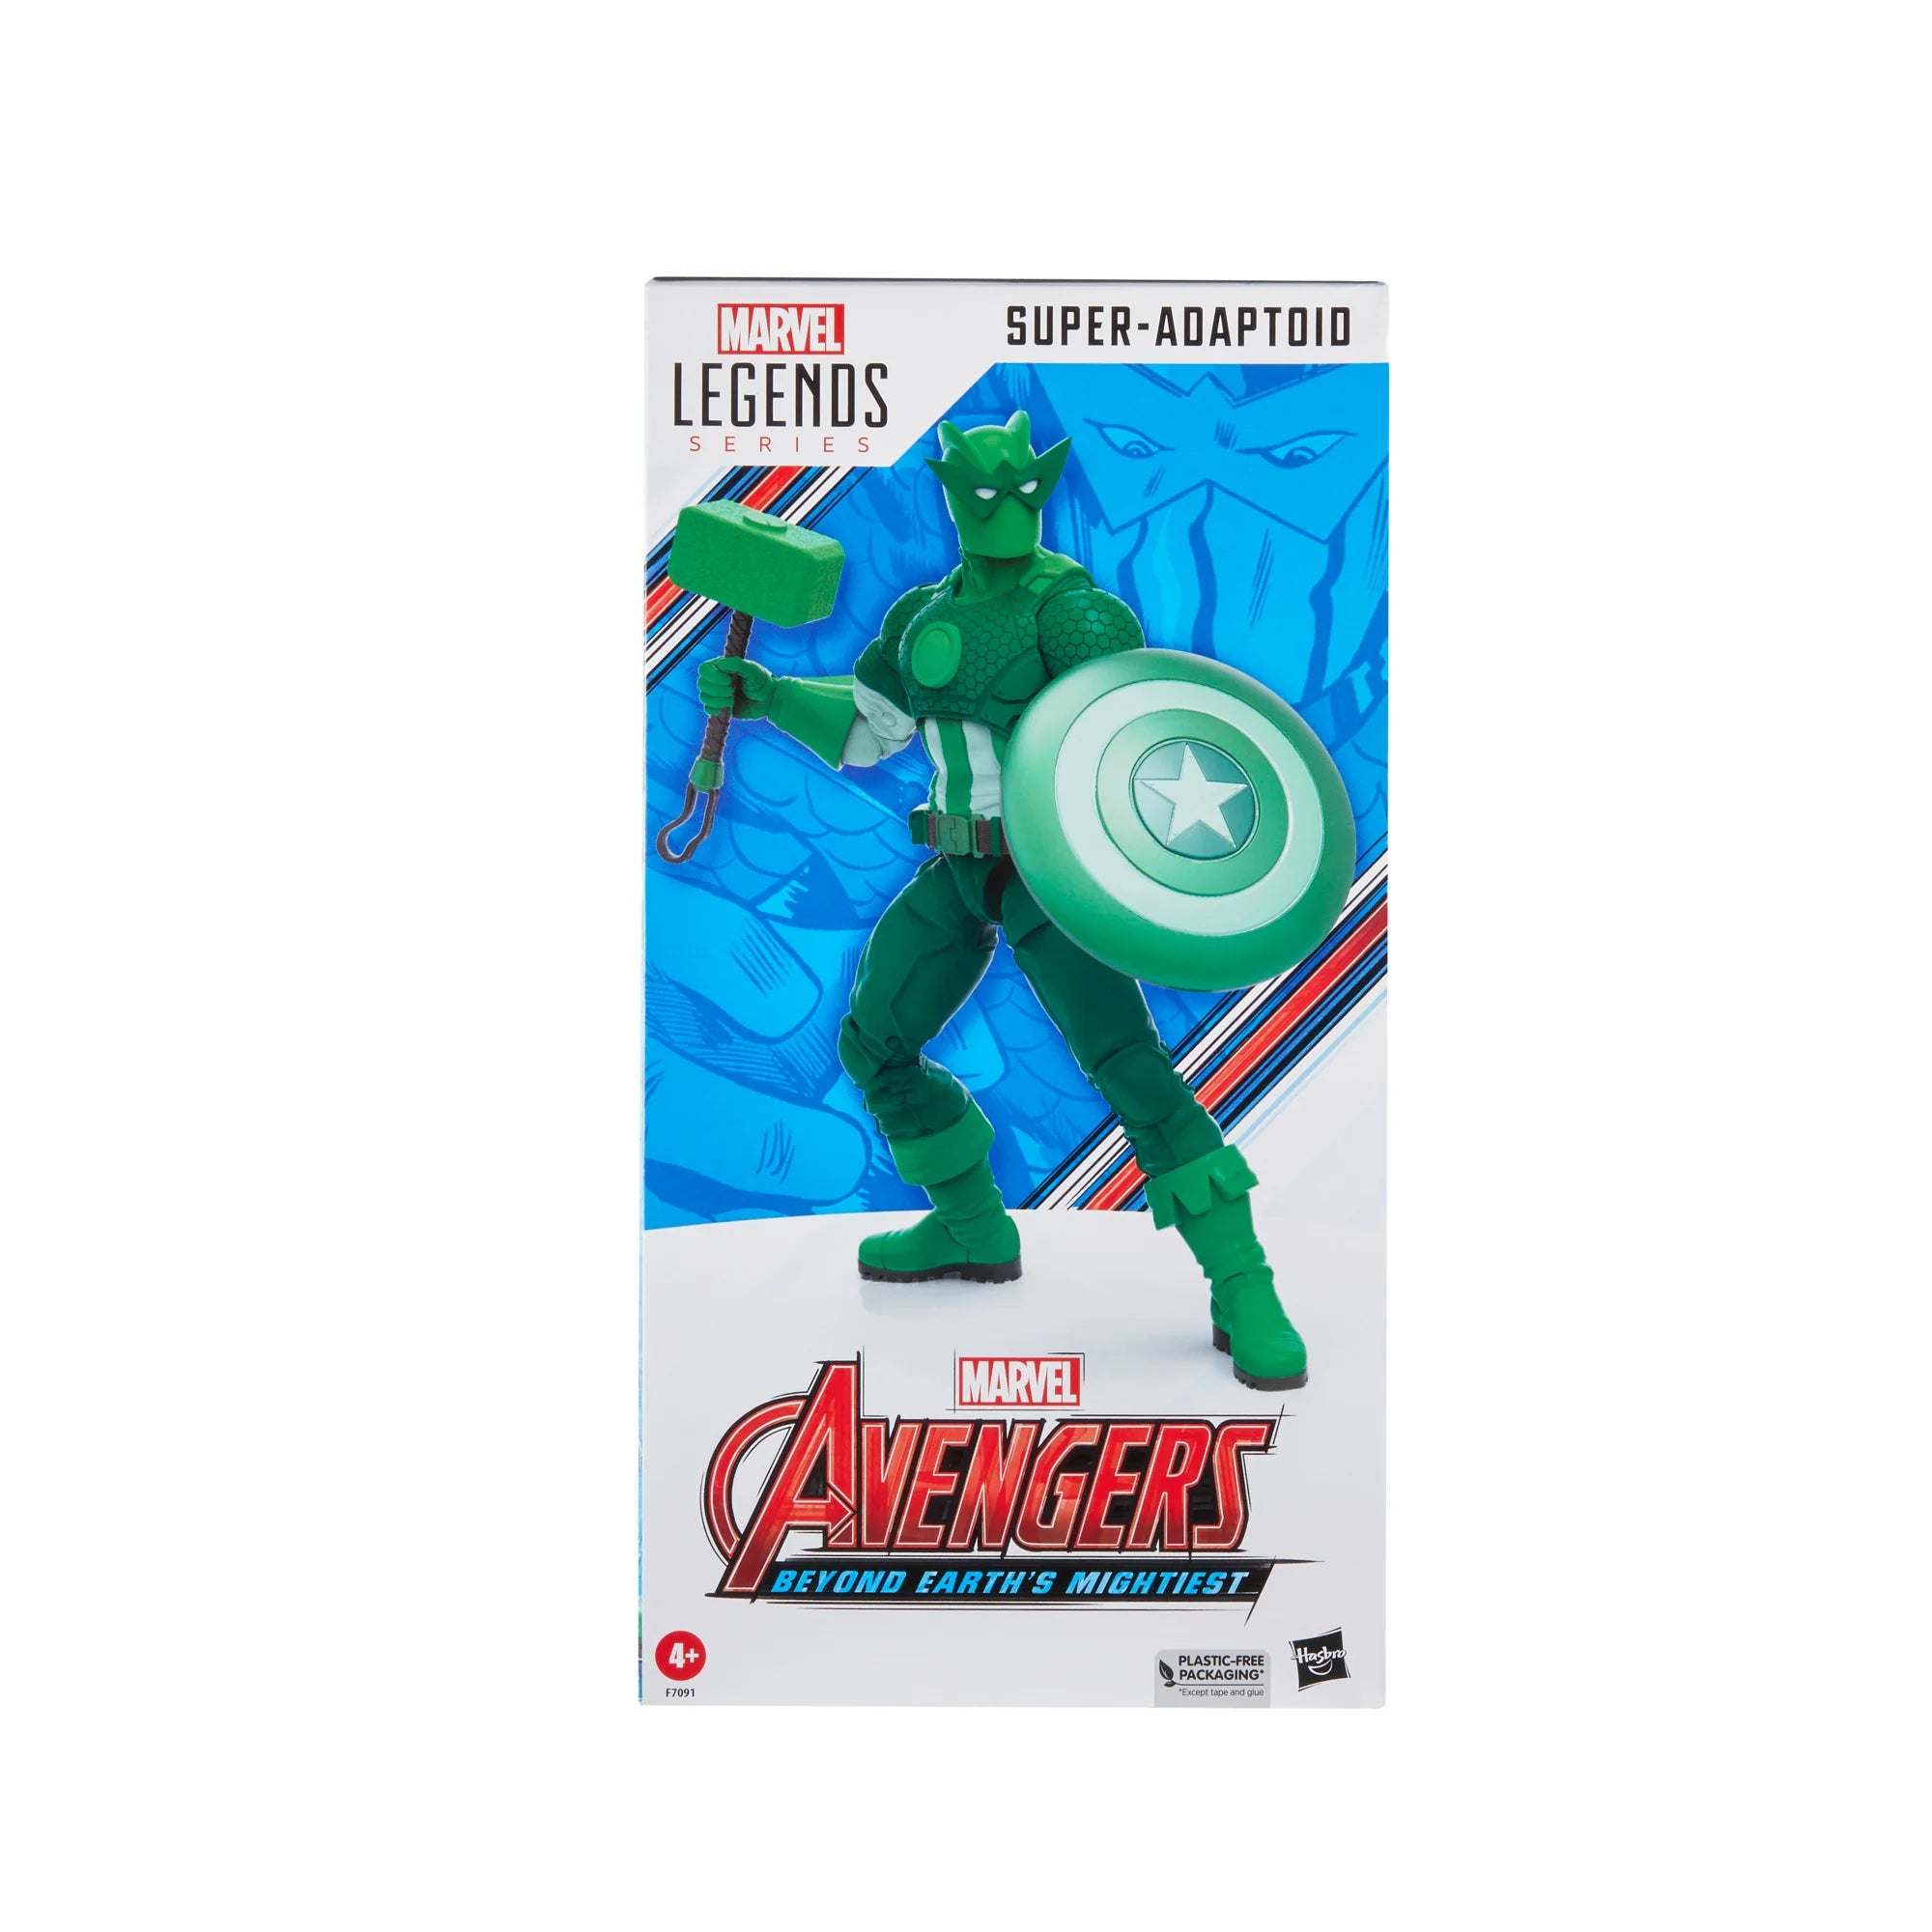 Marvel Legends: Avengers Beyond Earths Mightiest - Super Adaptoid